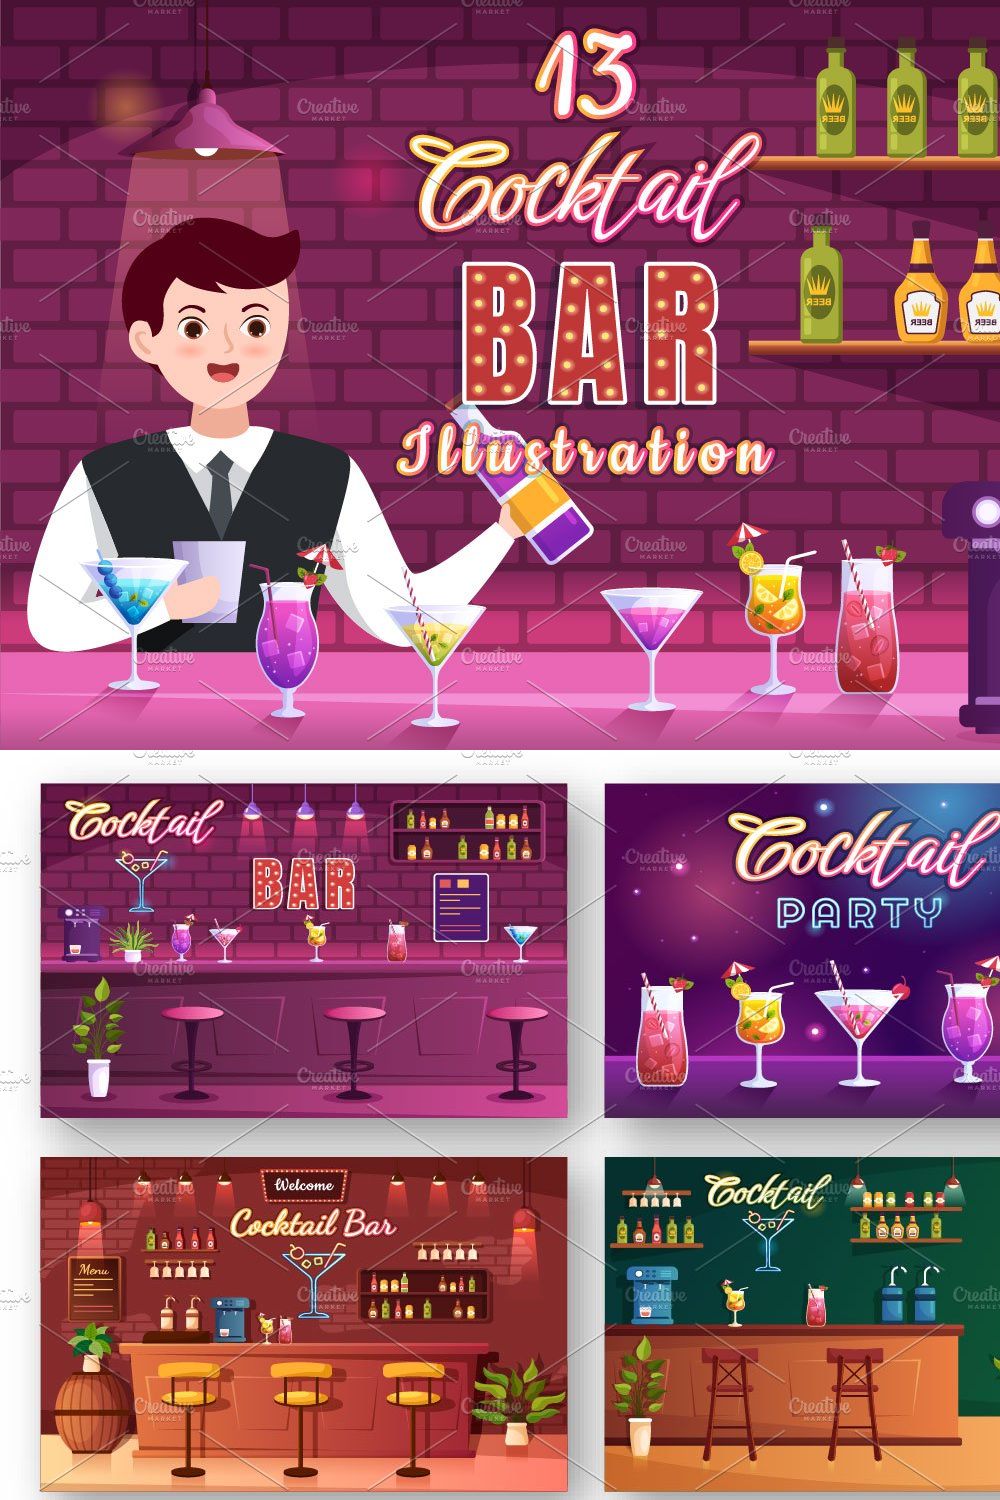 13 Cocktail Bar Illustration pinterest preview image.